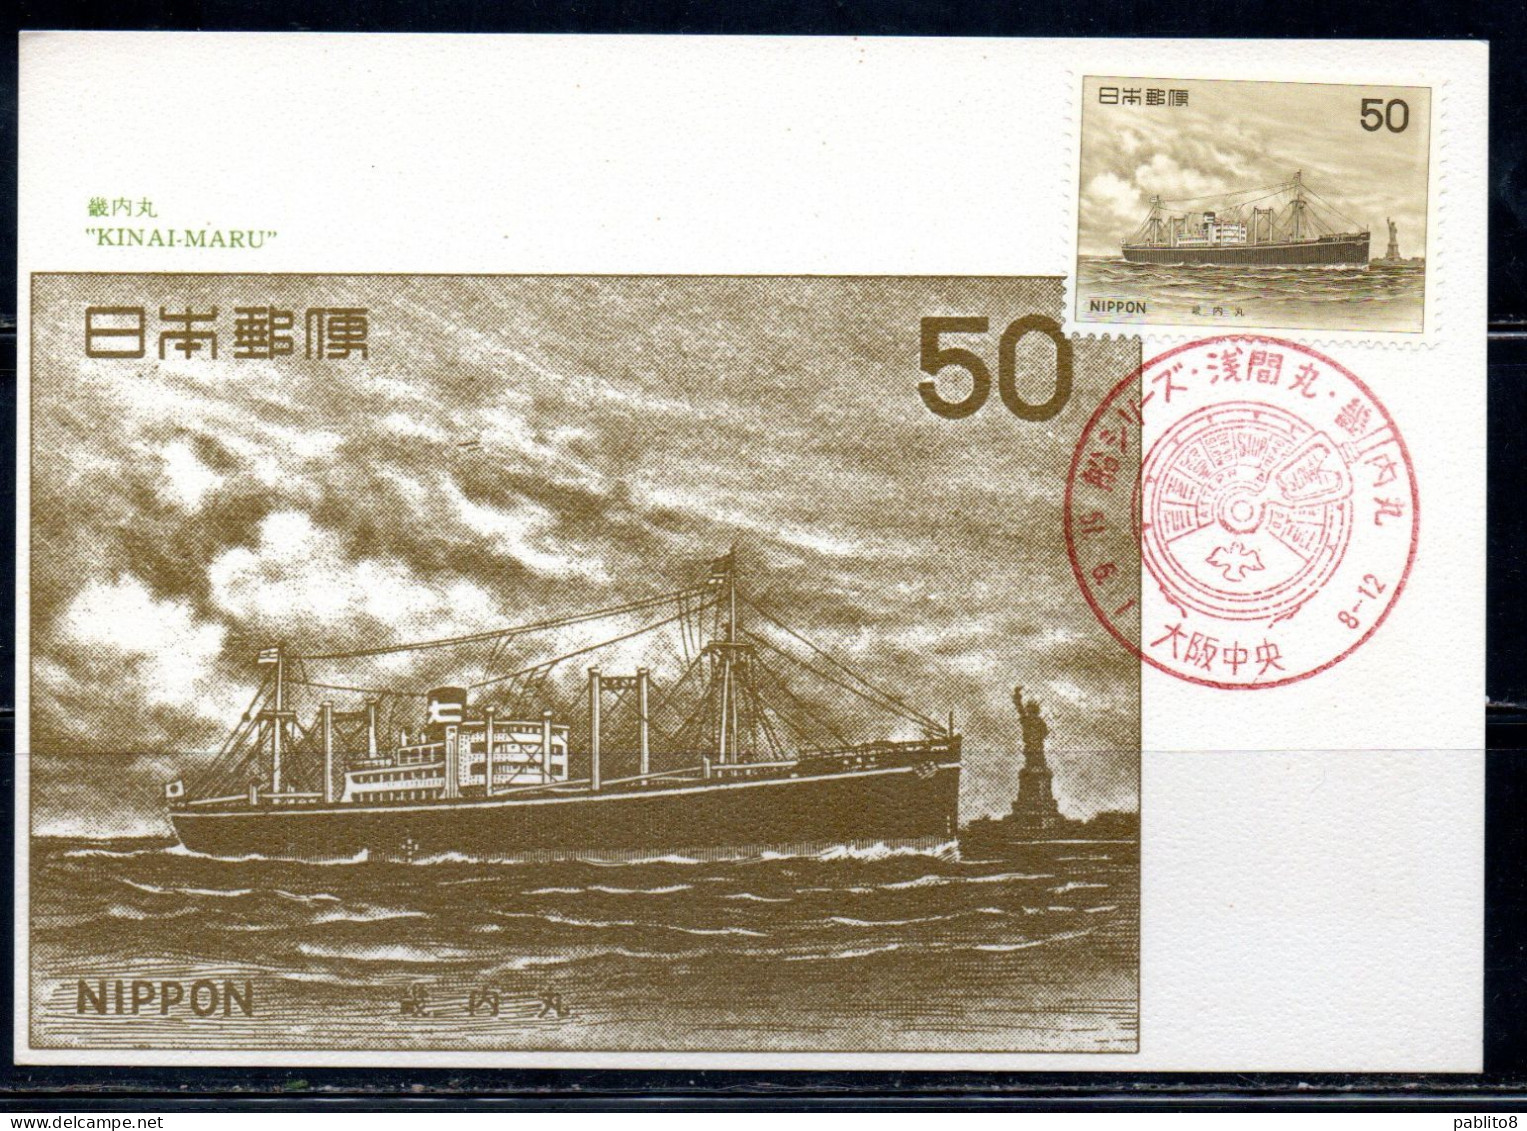 JAPAN GIAPPONE 1975 1976 HISTORIC SHIPS ISSUE KINAI-MARU SHIP 50y MAXI MAXIMUM CARD - Maximumkaarten